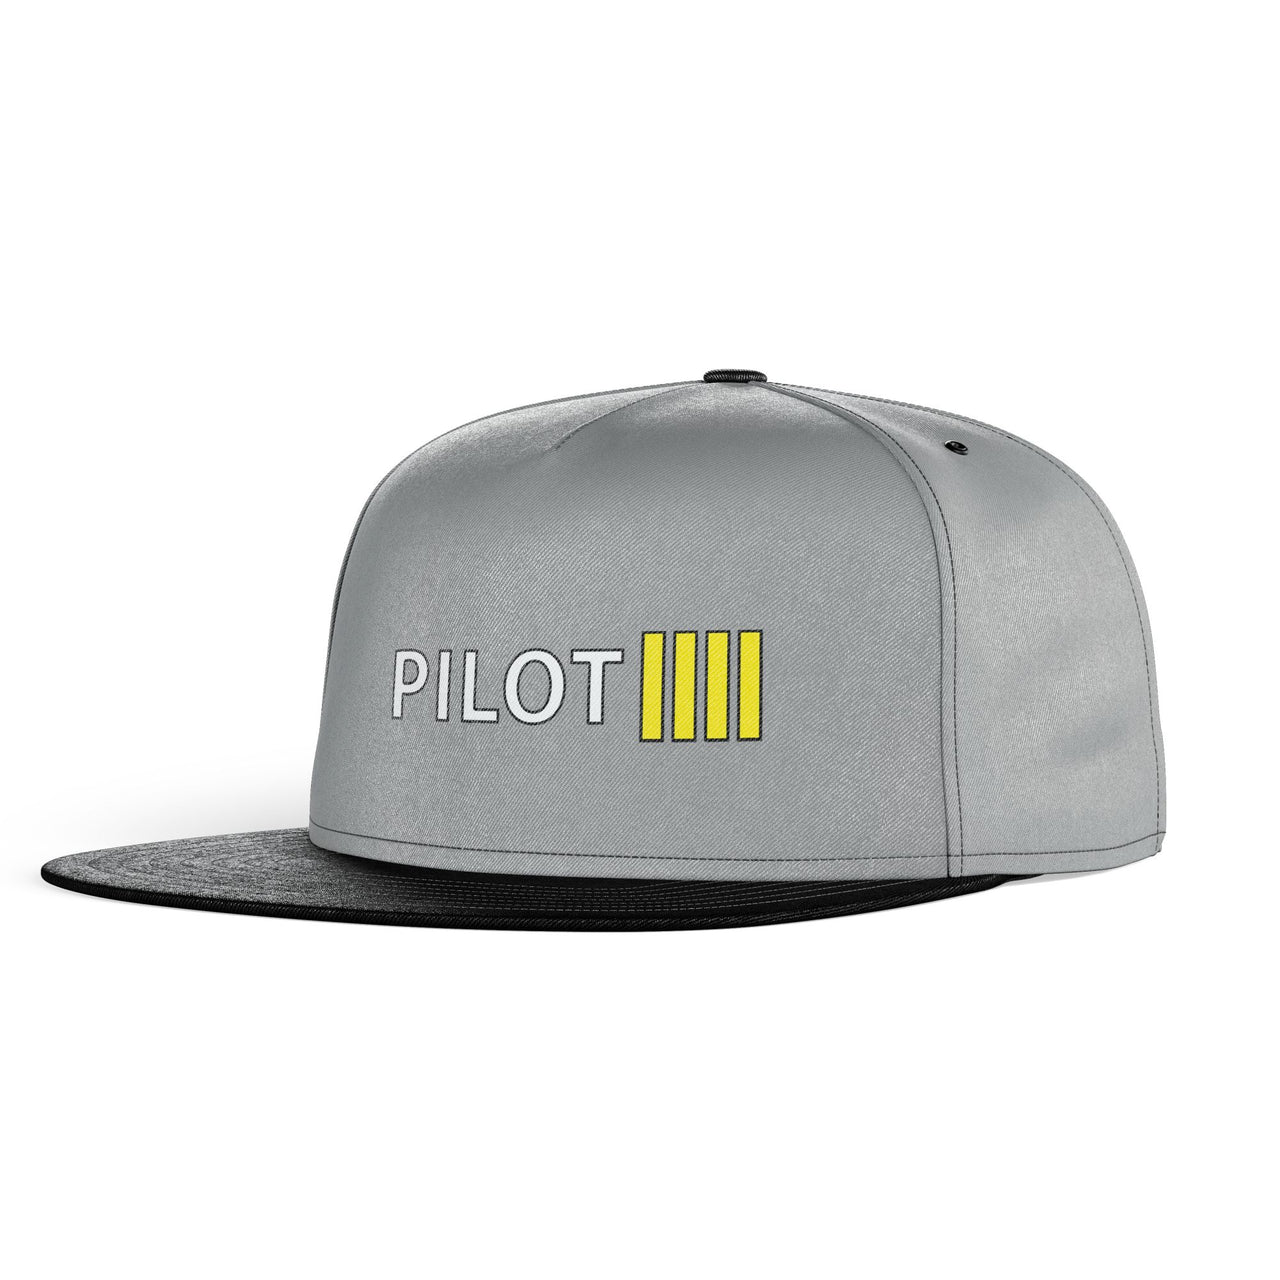 Pilot & Stripes (4 Lines) Designed Snapback Caps & Hats